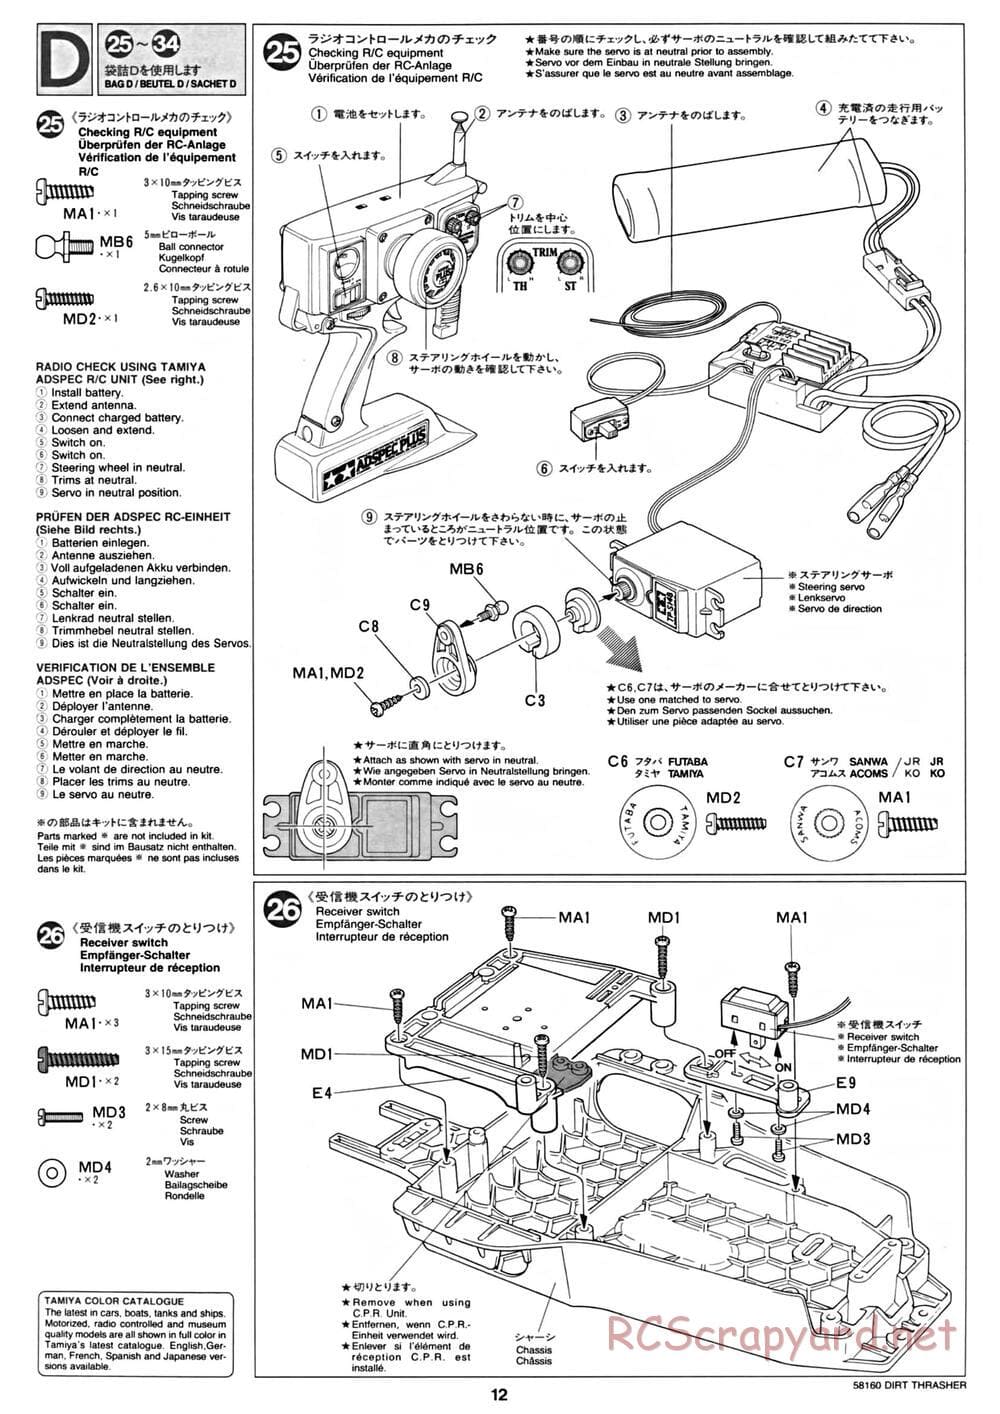 Tamiya - Dirt Thrasher Chassis - Manual - Page 12